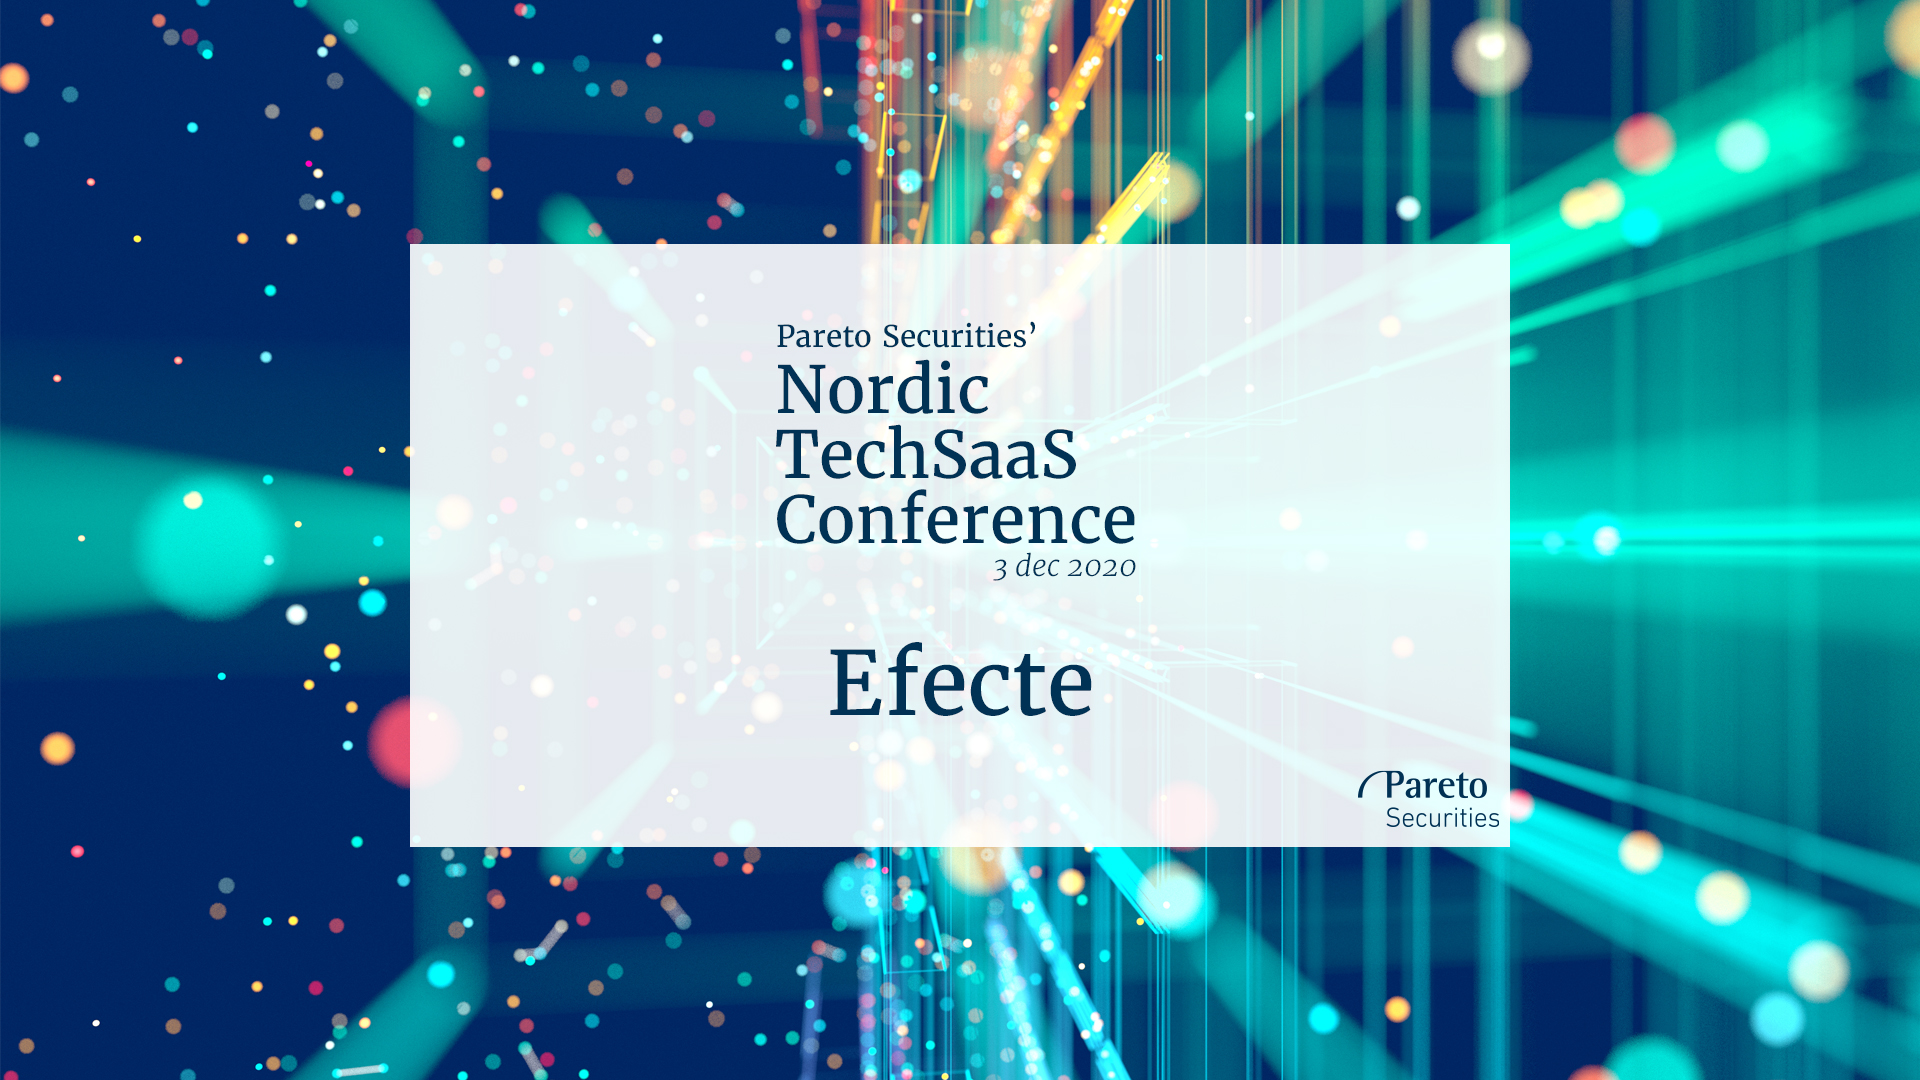 Efecte / Pareto Securities’ virtual Nordic TechSaaS Conference